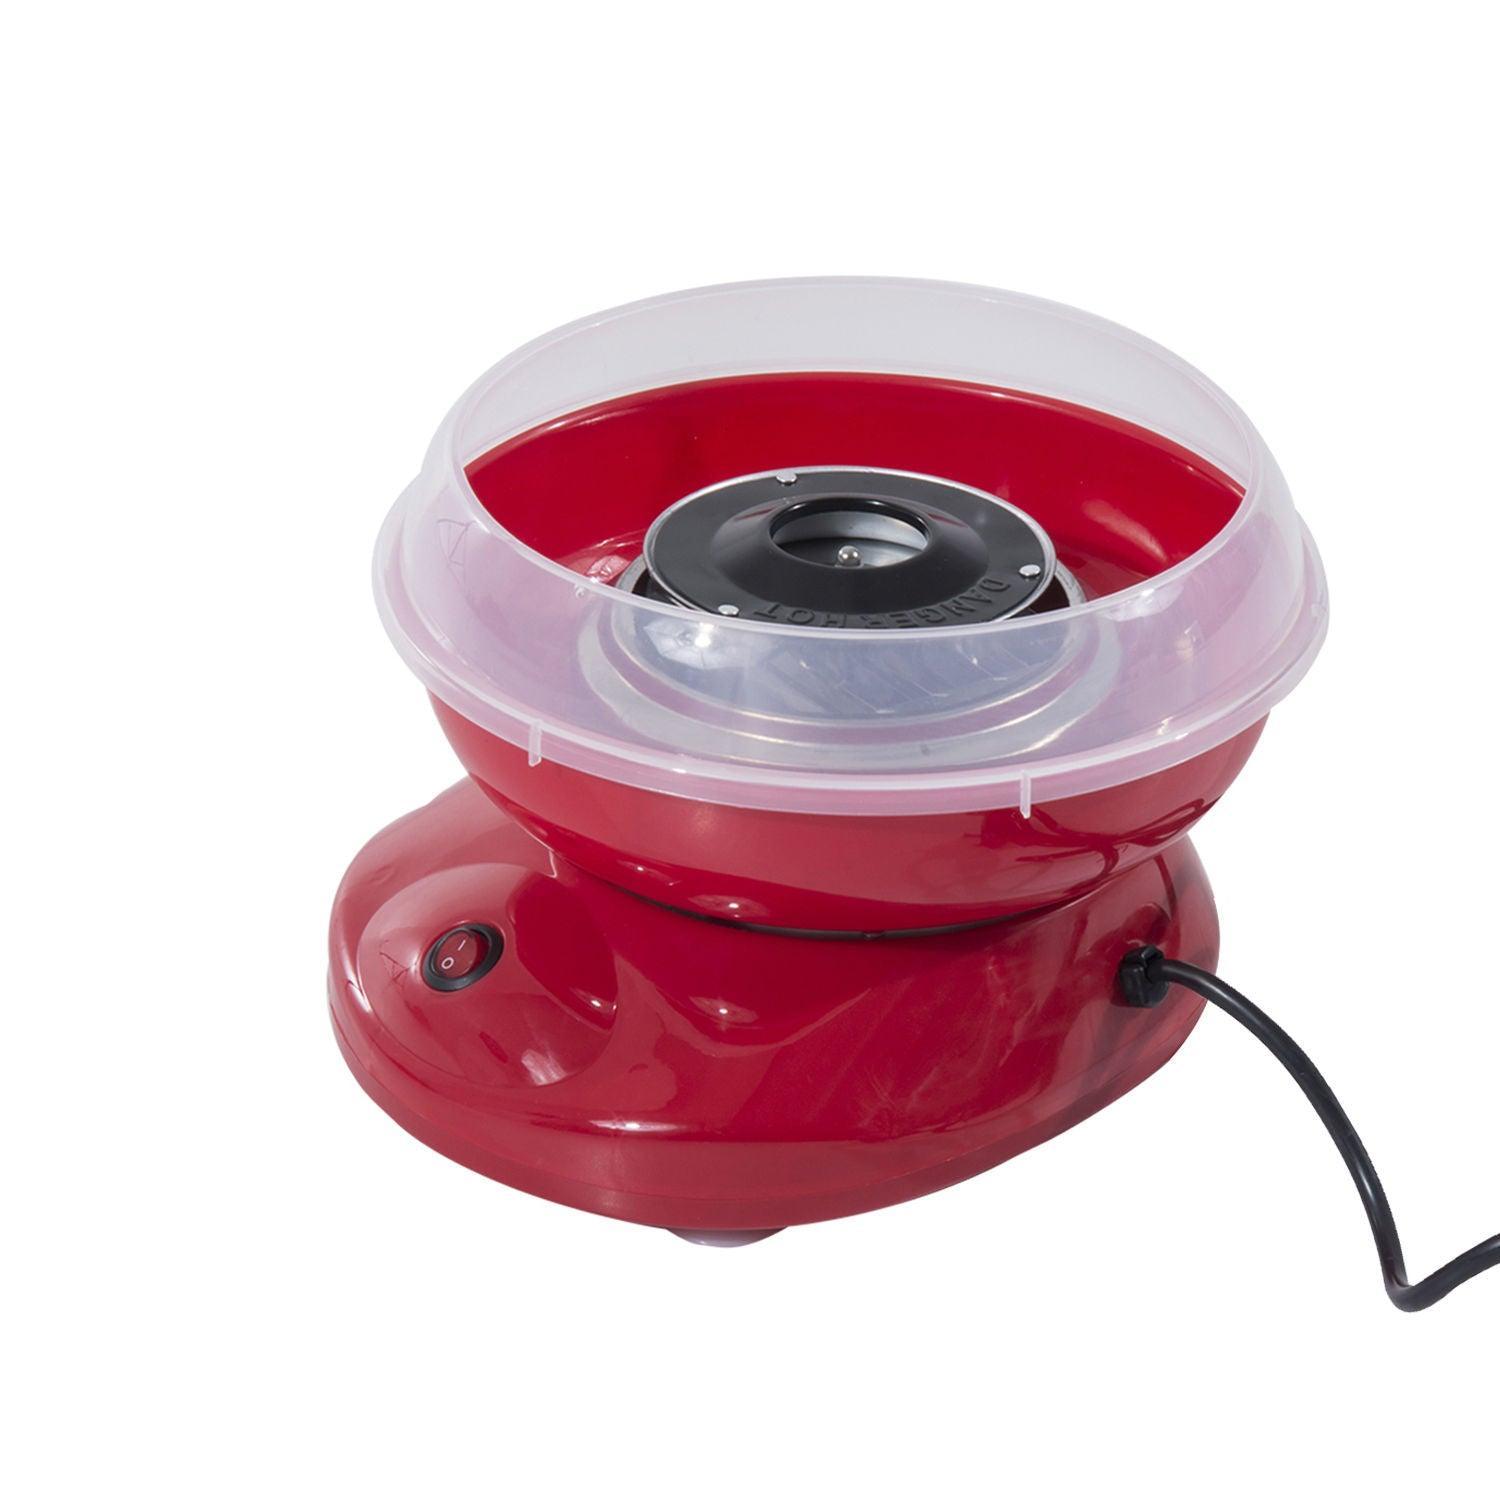 HOMCOM Electric Cotton Candy Machine - Red - ALL4U RETAILER LTD